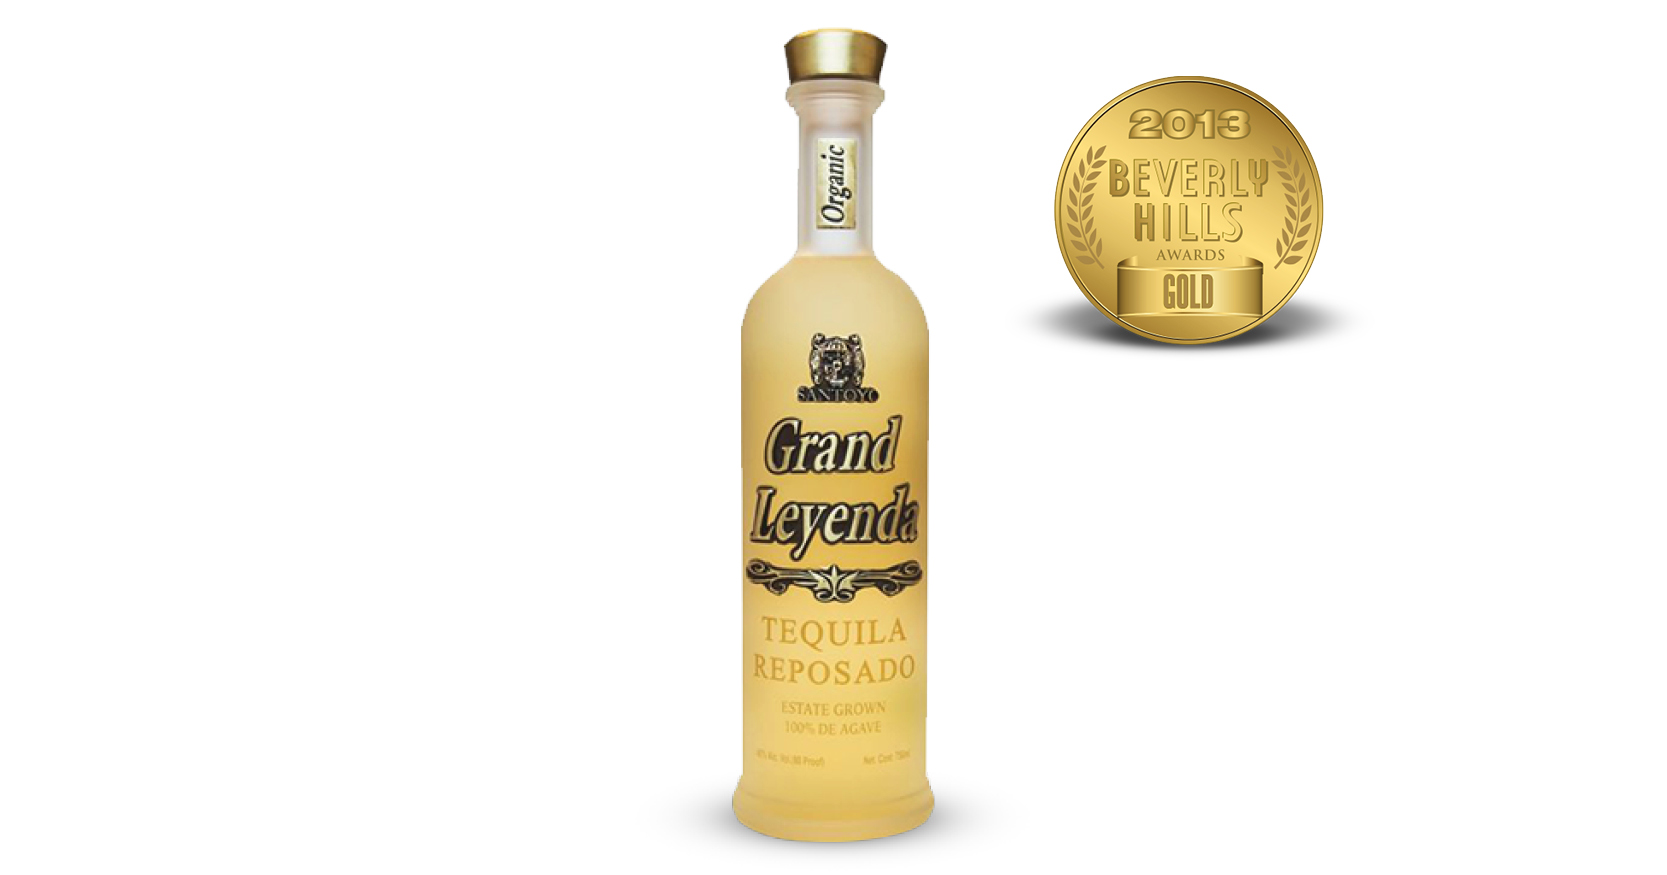 Santoyo Grand Leyenda Reposado Tequila